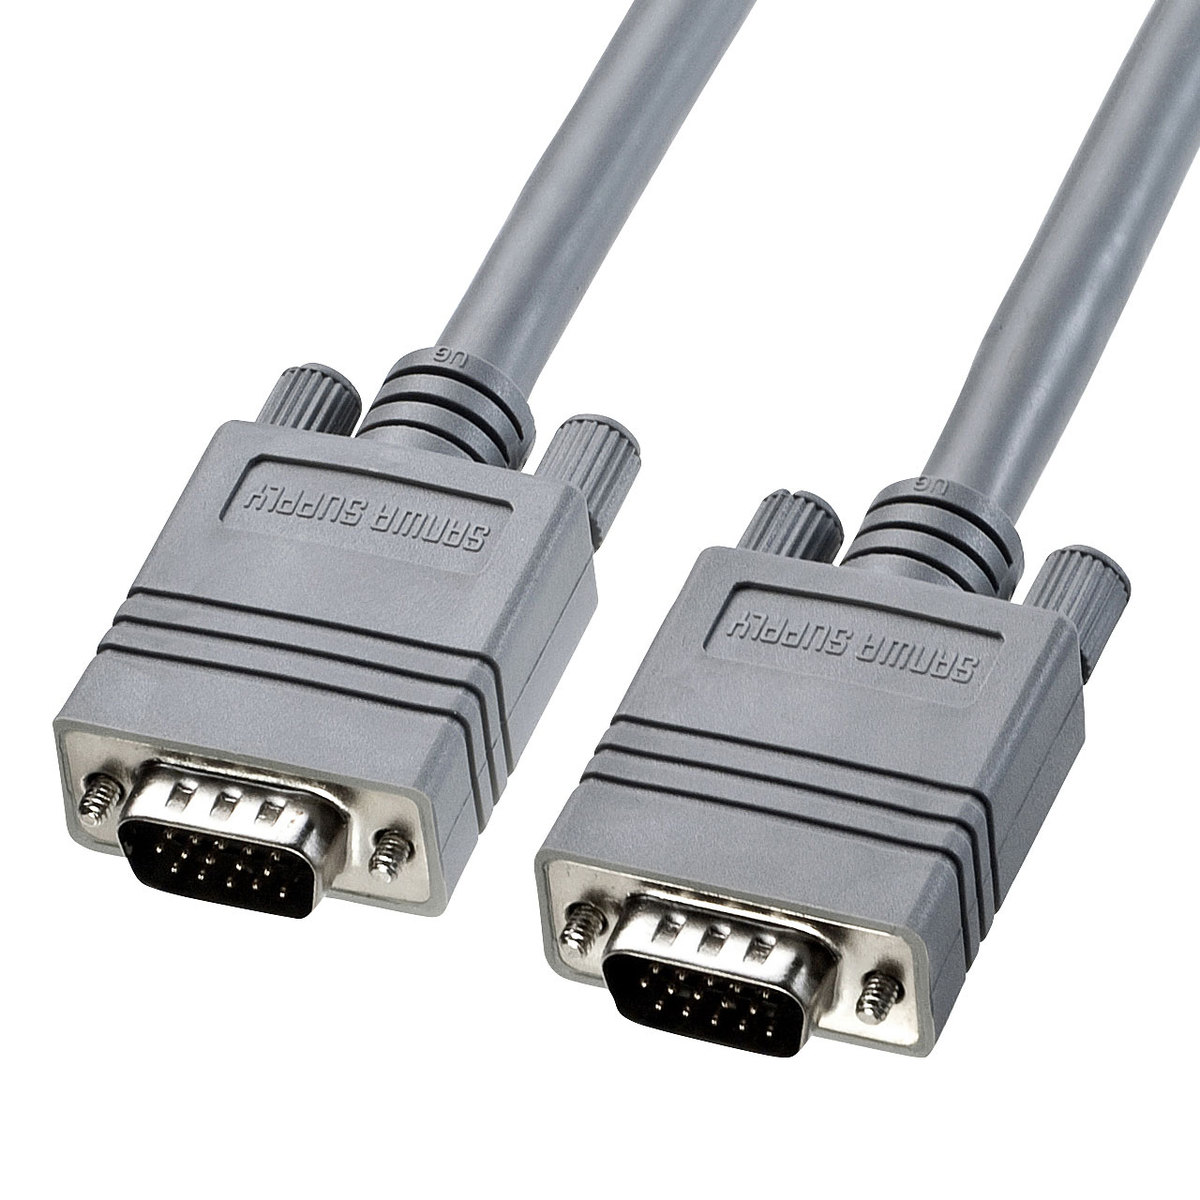 Display Cable (Compound Coaxial / Analog RGB), KB-CHD Series KB-CHD157K2